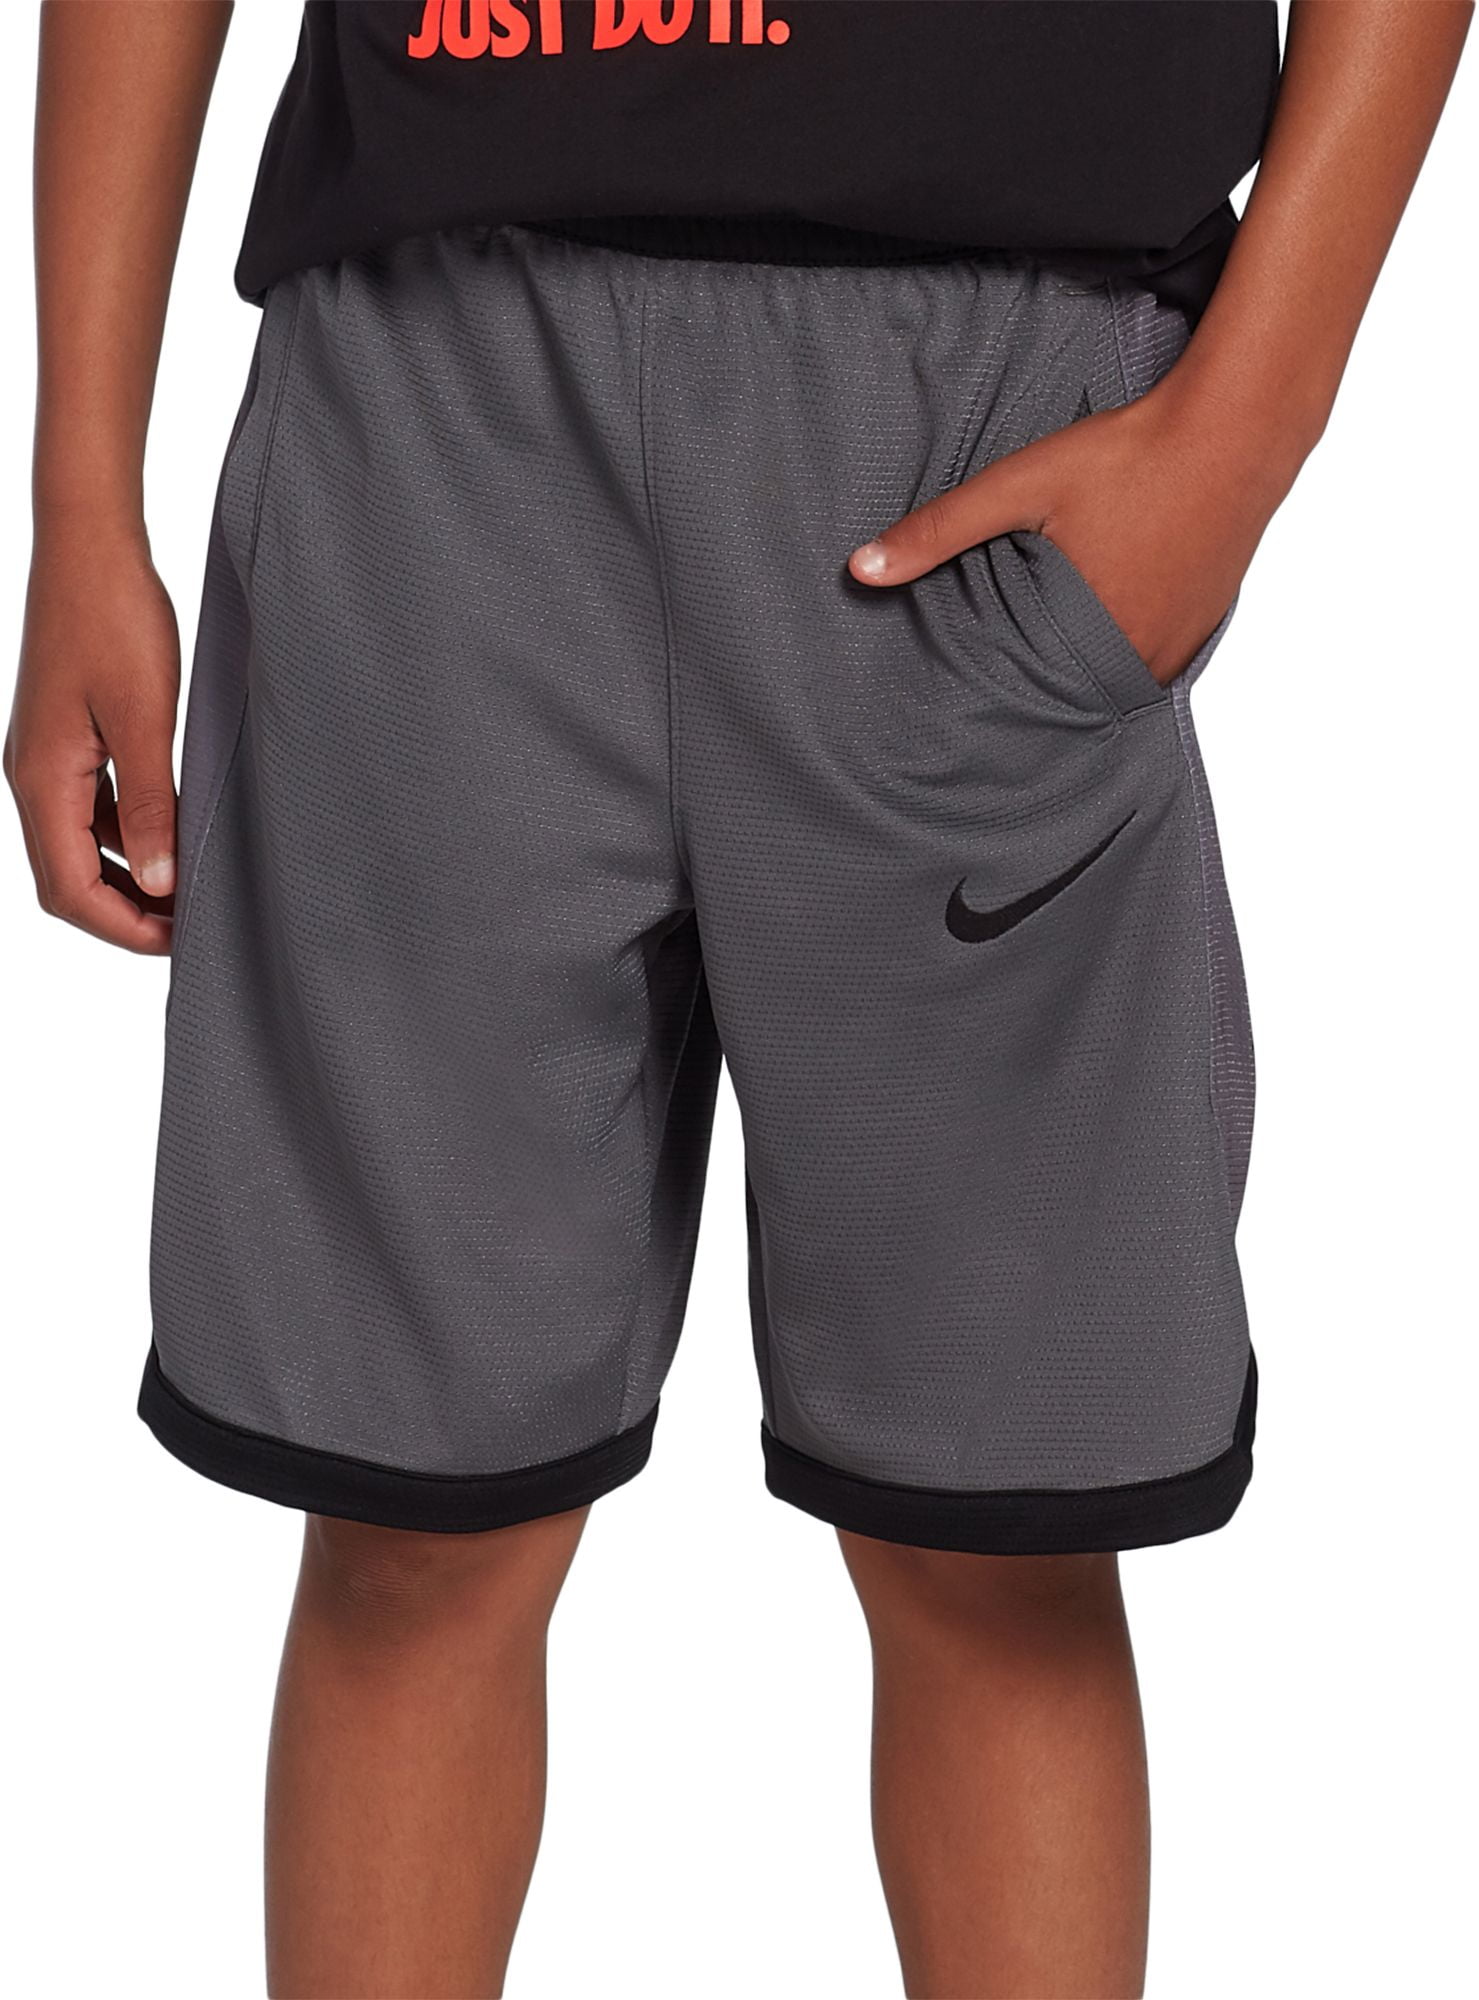 boys elite basketball shorts